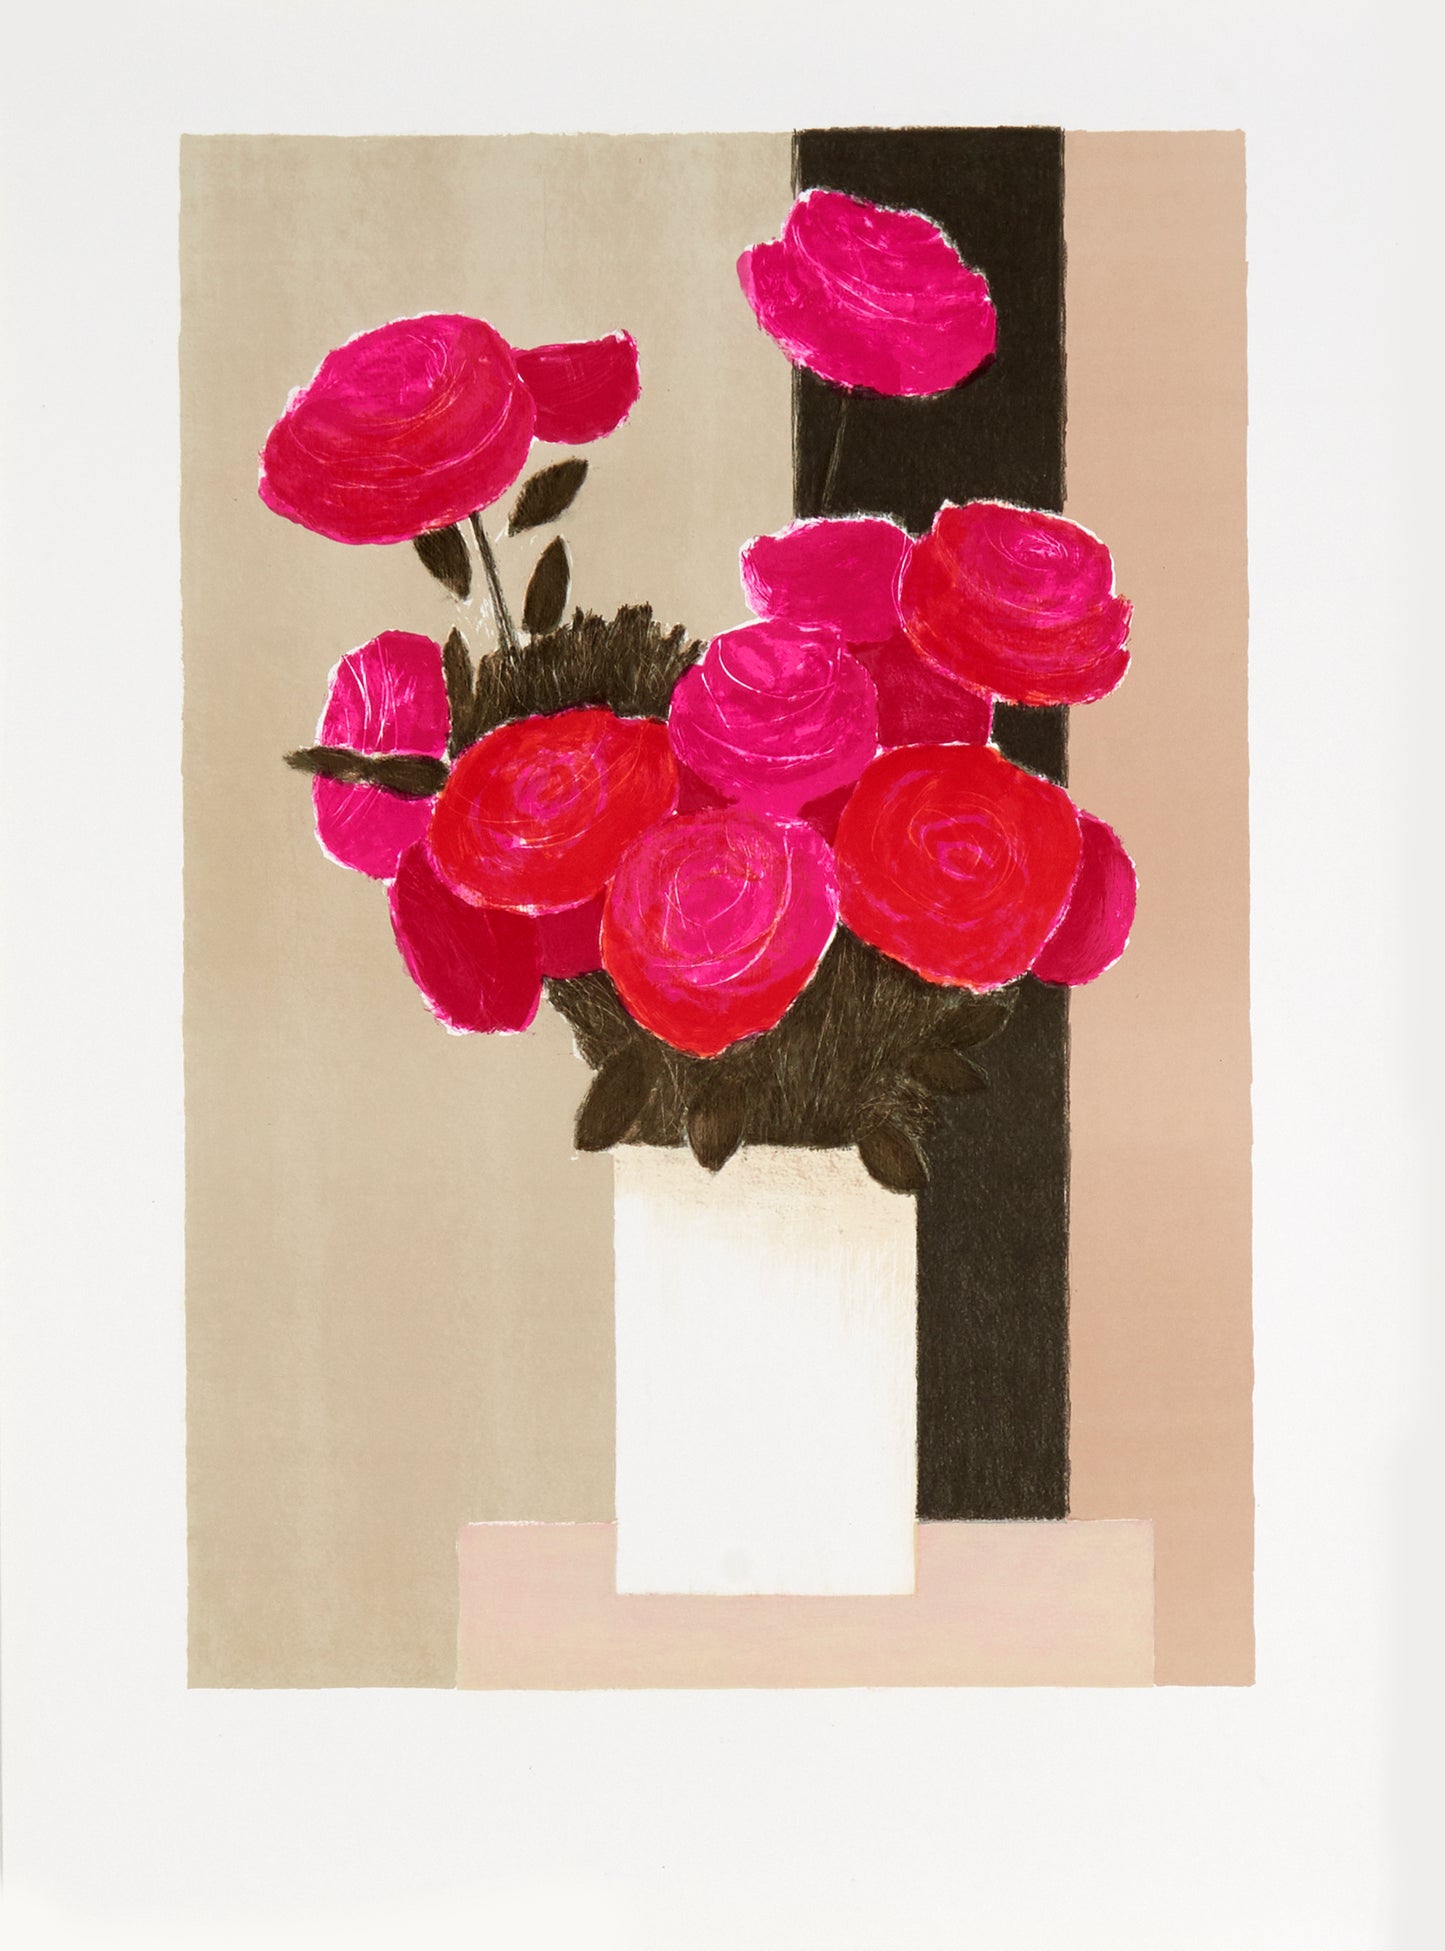 Roses Rouges a la Bande Noire by Bernard Cathelin, 1985 - Mourlot Editions - Fine_Art - Poster - Lithograph - Wall Art - Vintage - Prints - Original